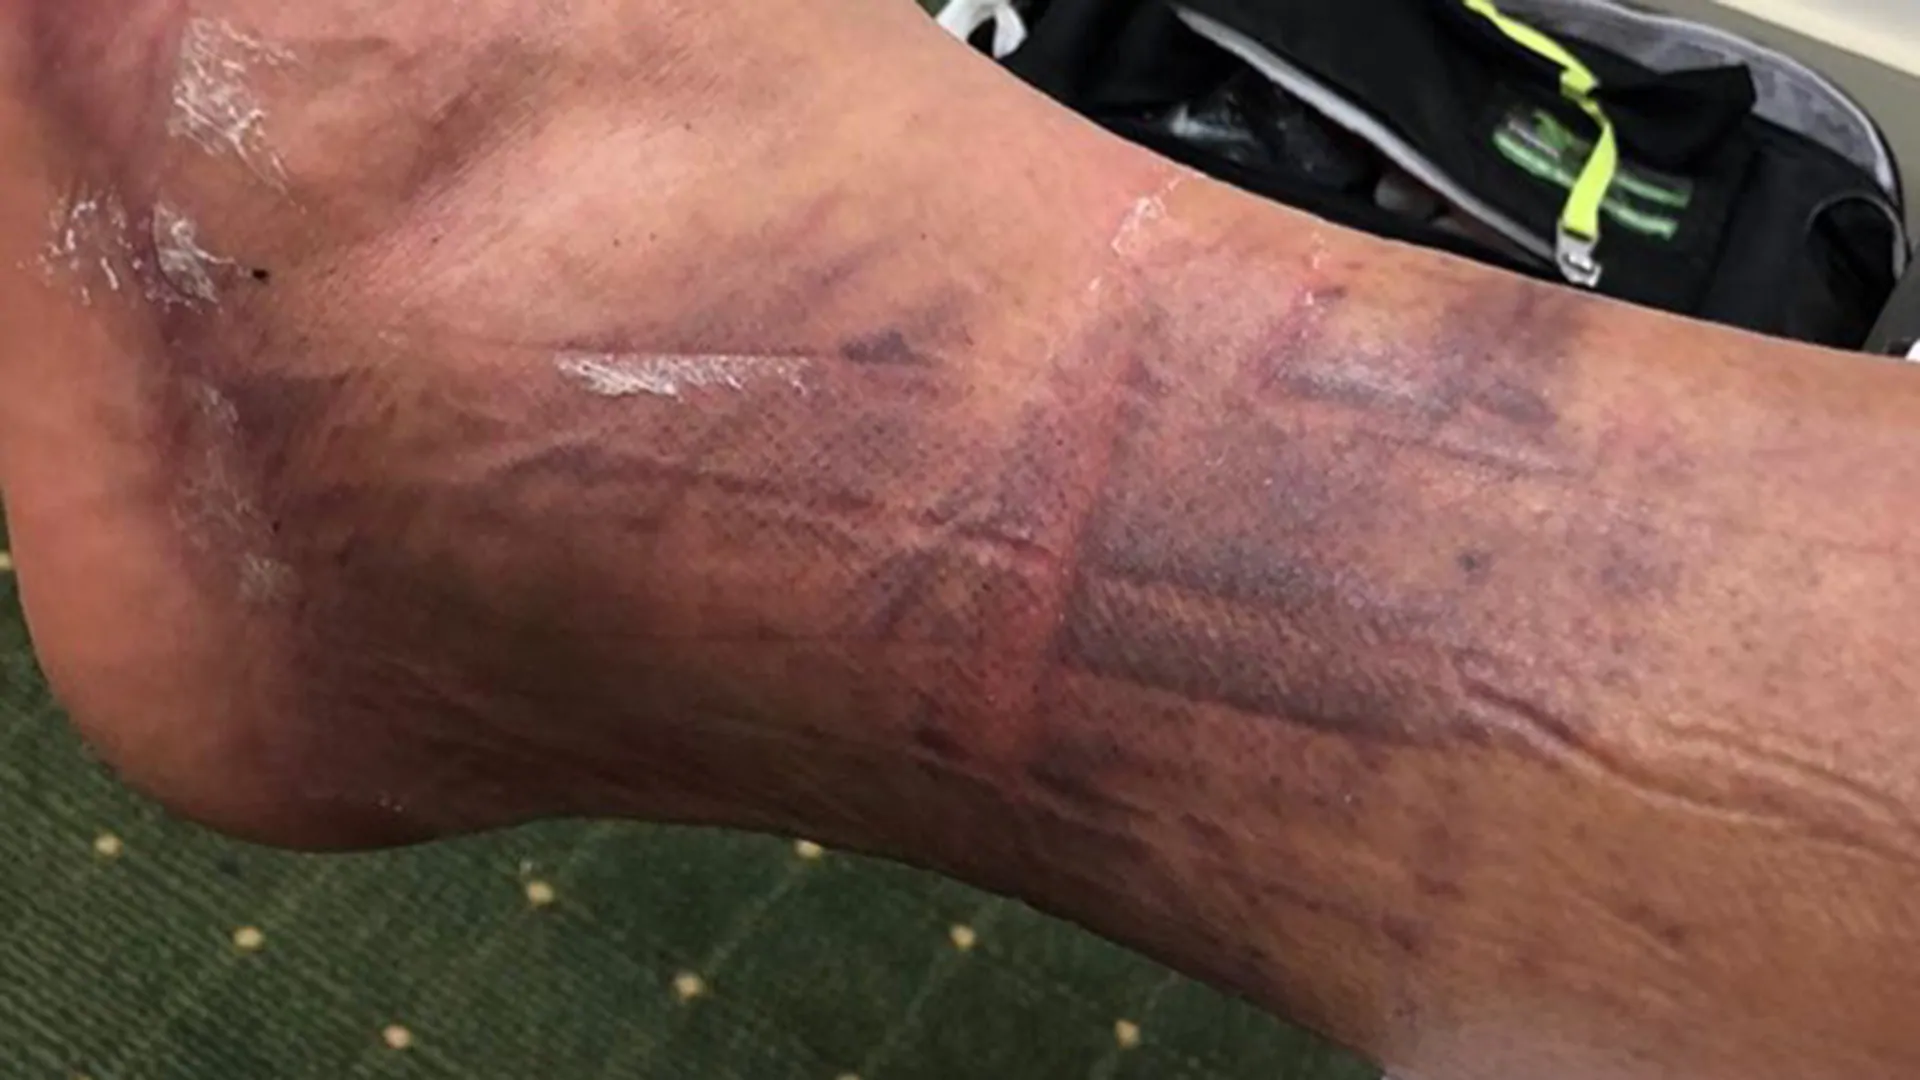 Photos: Finau shows off injured, purple ankle